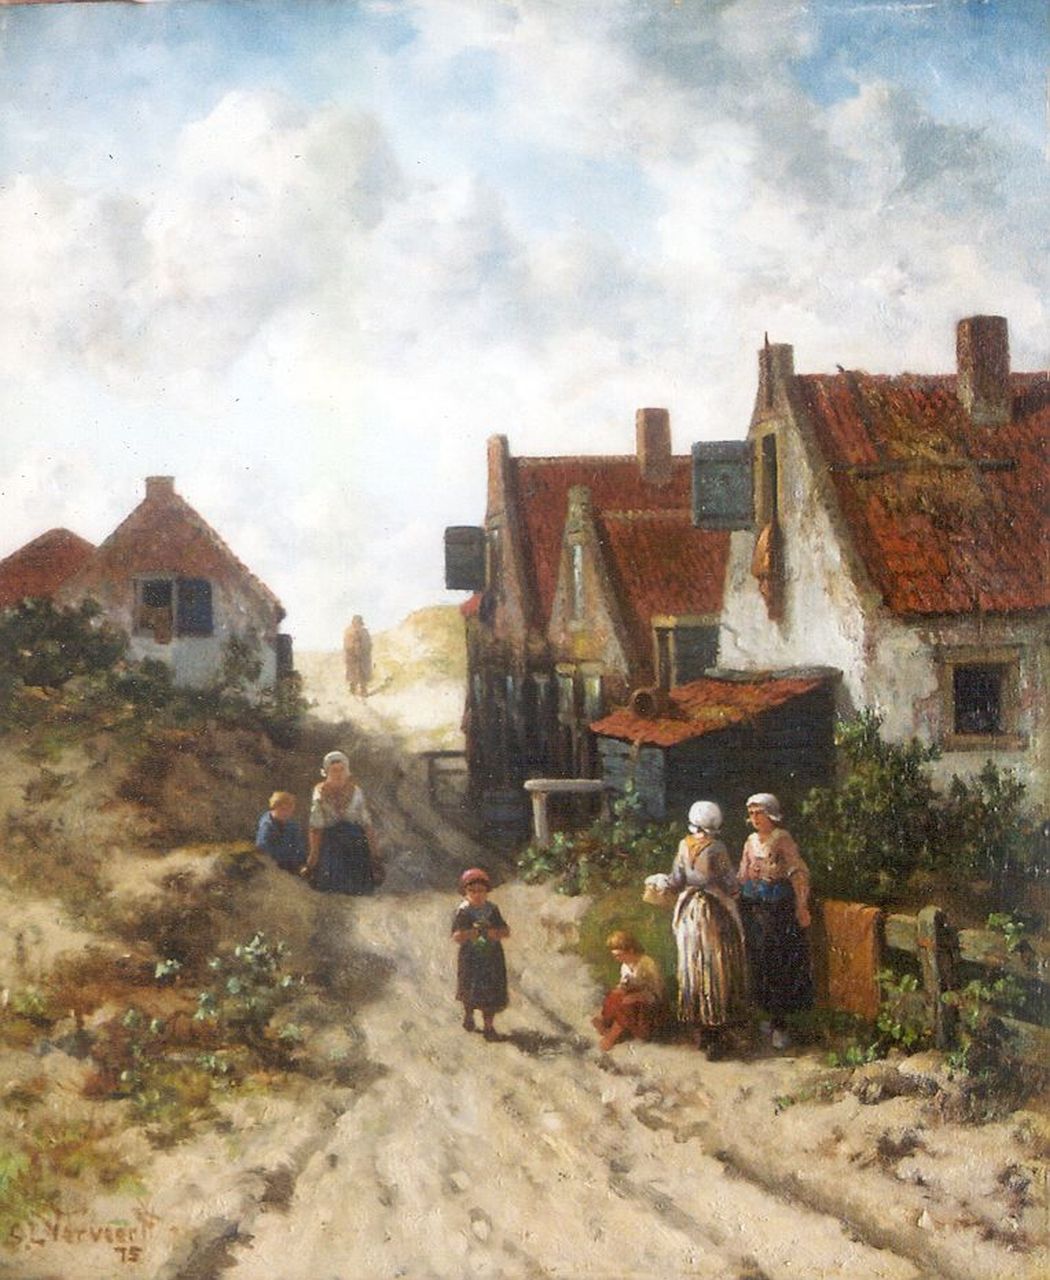 Verveer S.L.  | 'Salomon' Leonardus Verveer, Behind the dunes, Oud-Scheveningen, oil on panel 40.1 x 33.4 cm, signed l.l. and dated '75